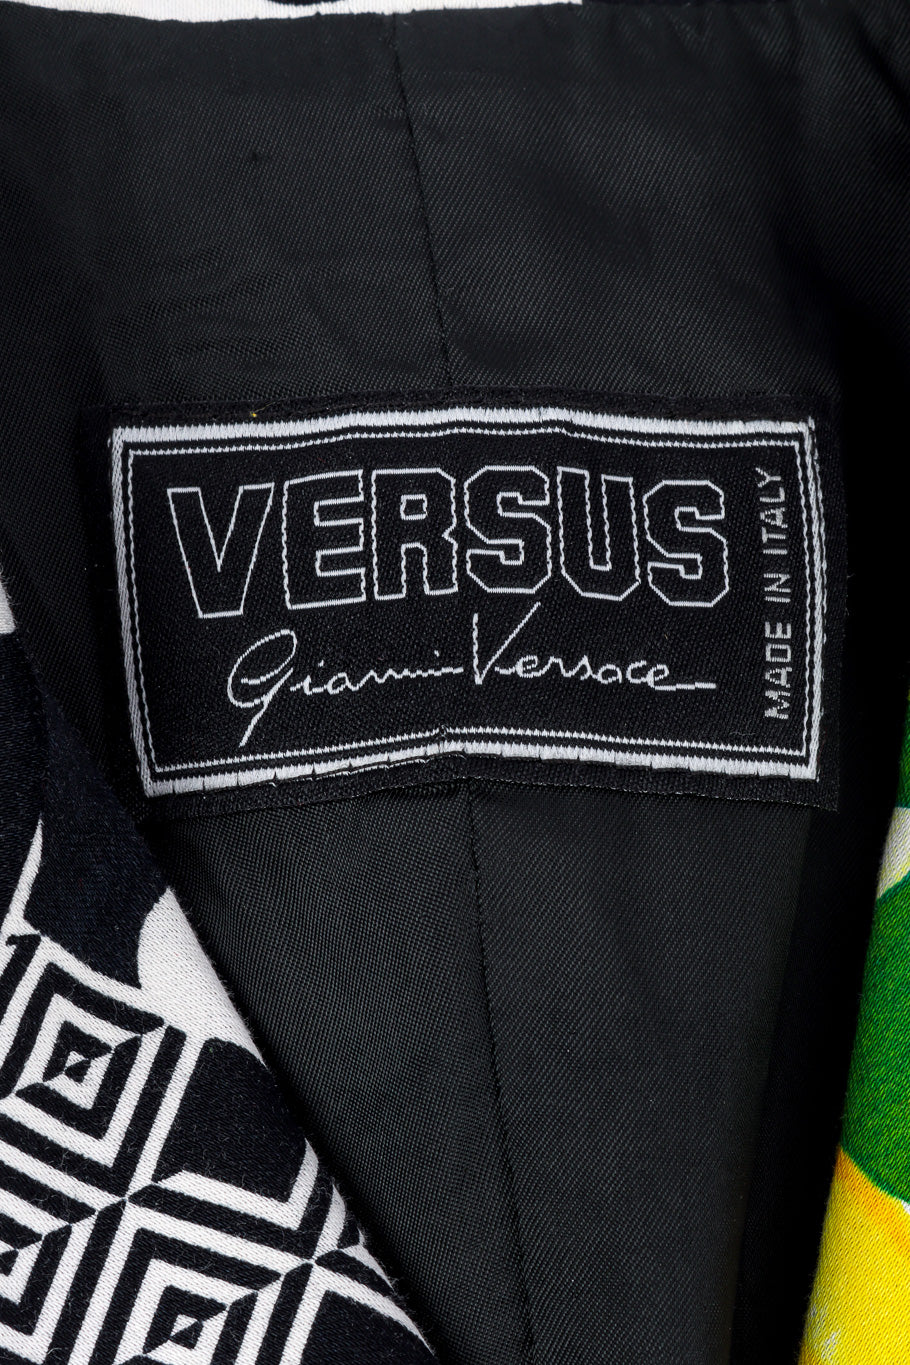 Vintage Versus Versace Floral Checkered Print Jacket signature label closeup @Recessla